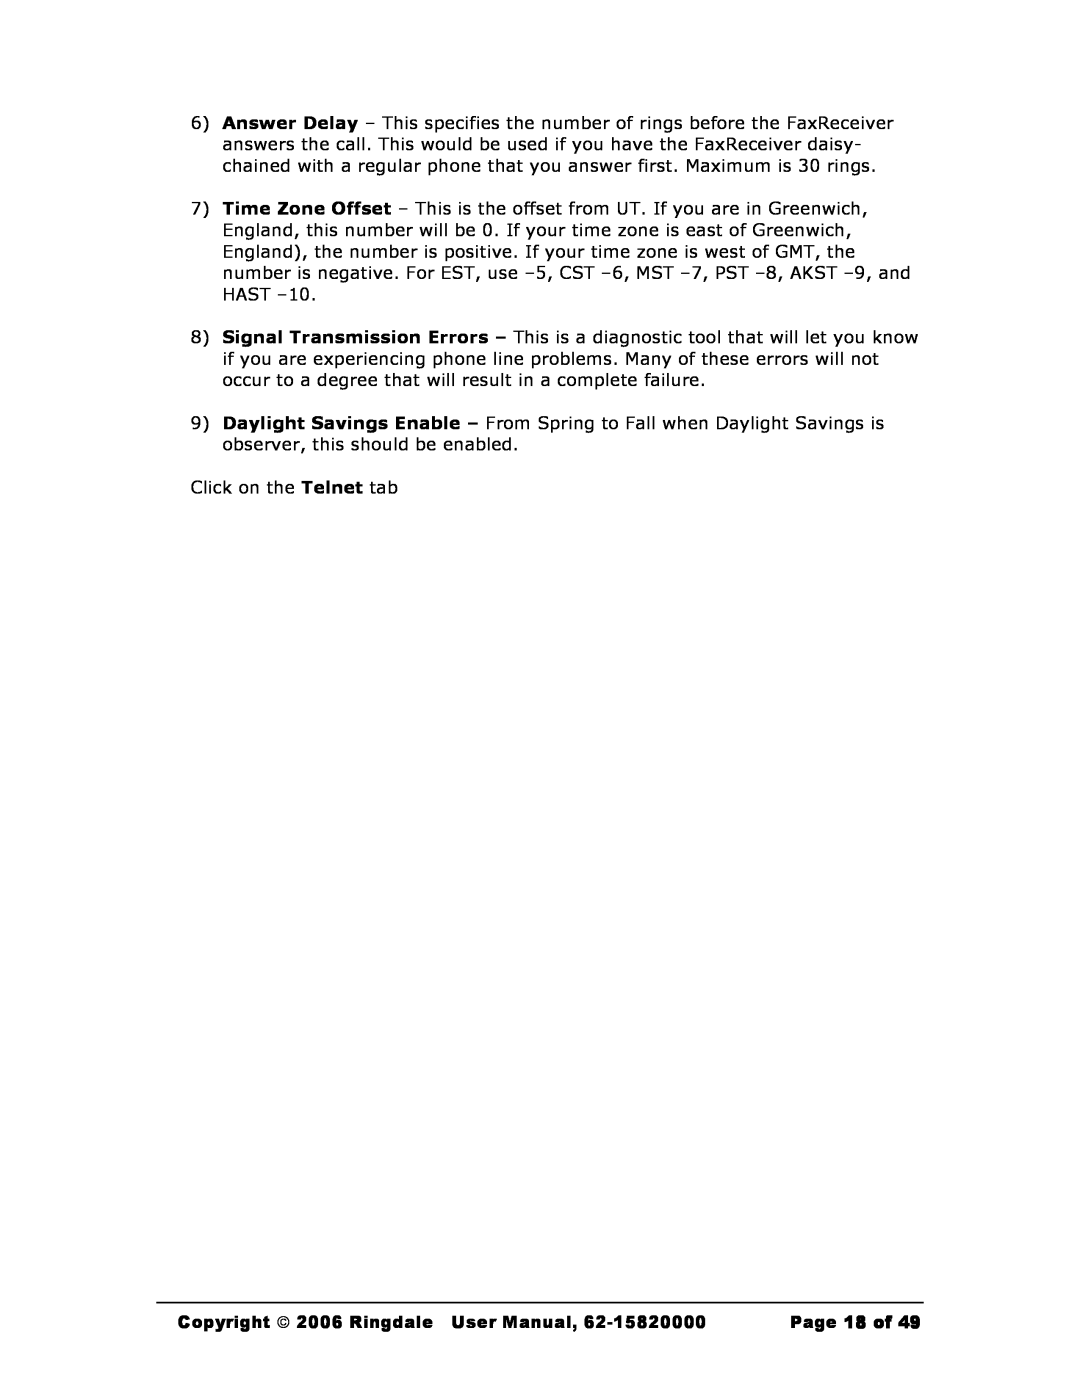 Black Box MC200A user manual Click on the Telnet tab, Copyright  2006 Ringdale User Manual, Page 18 of 